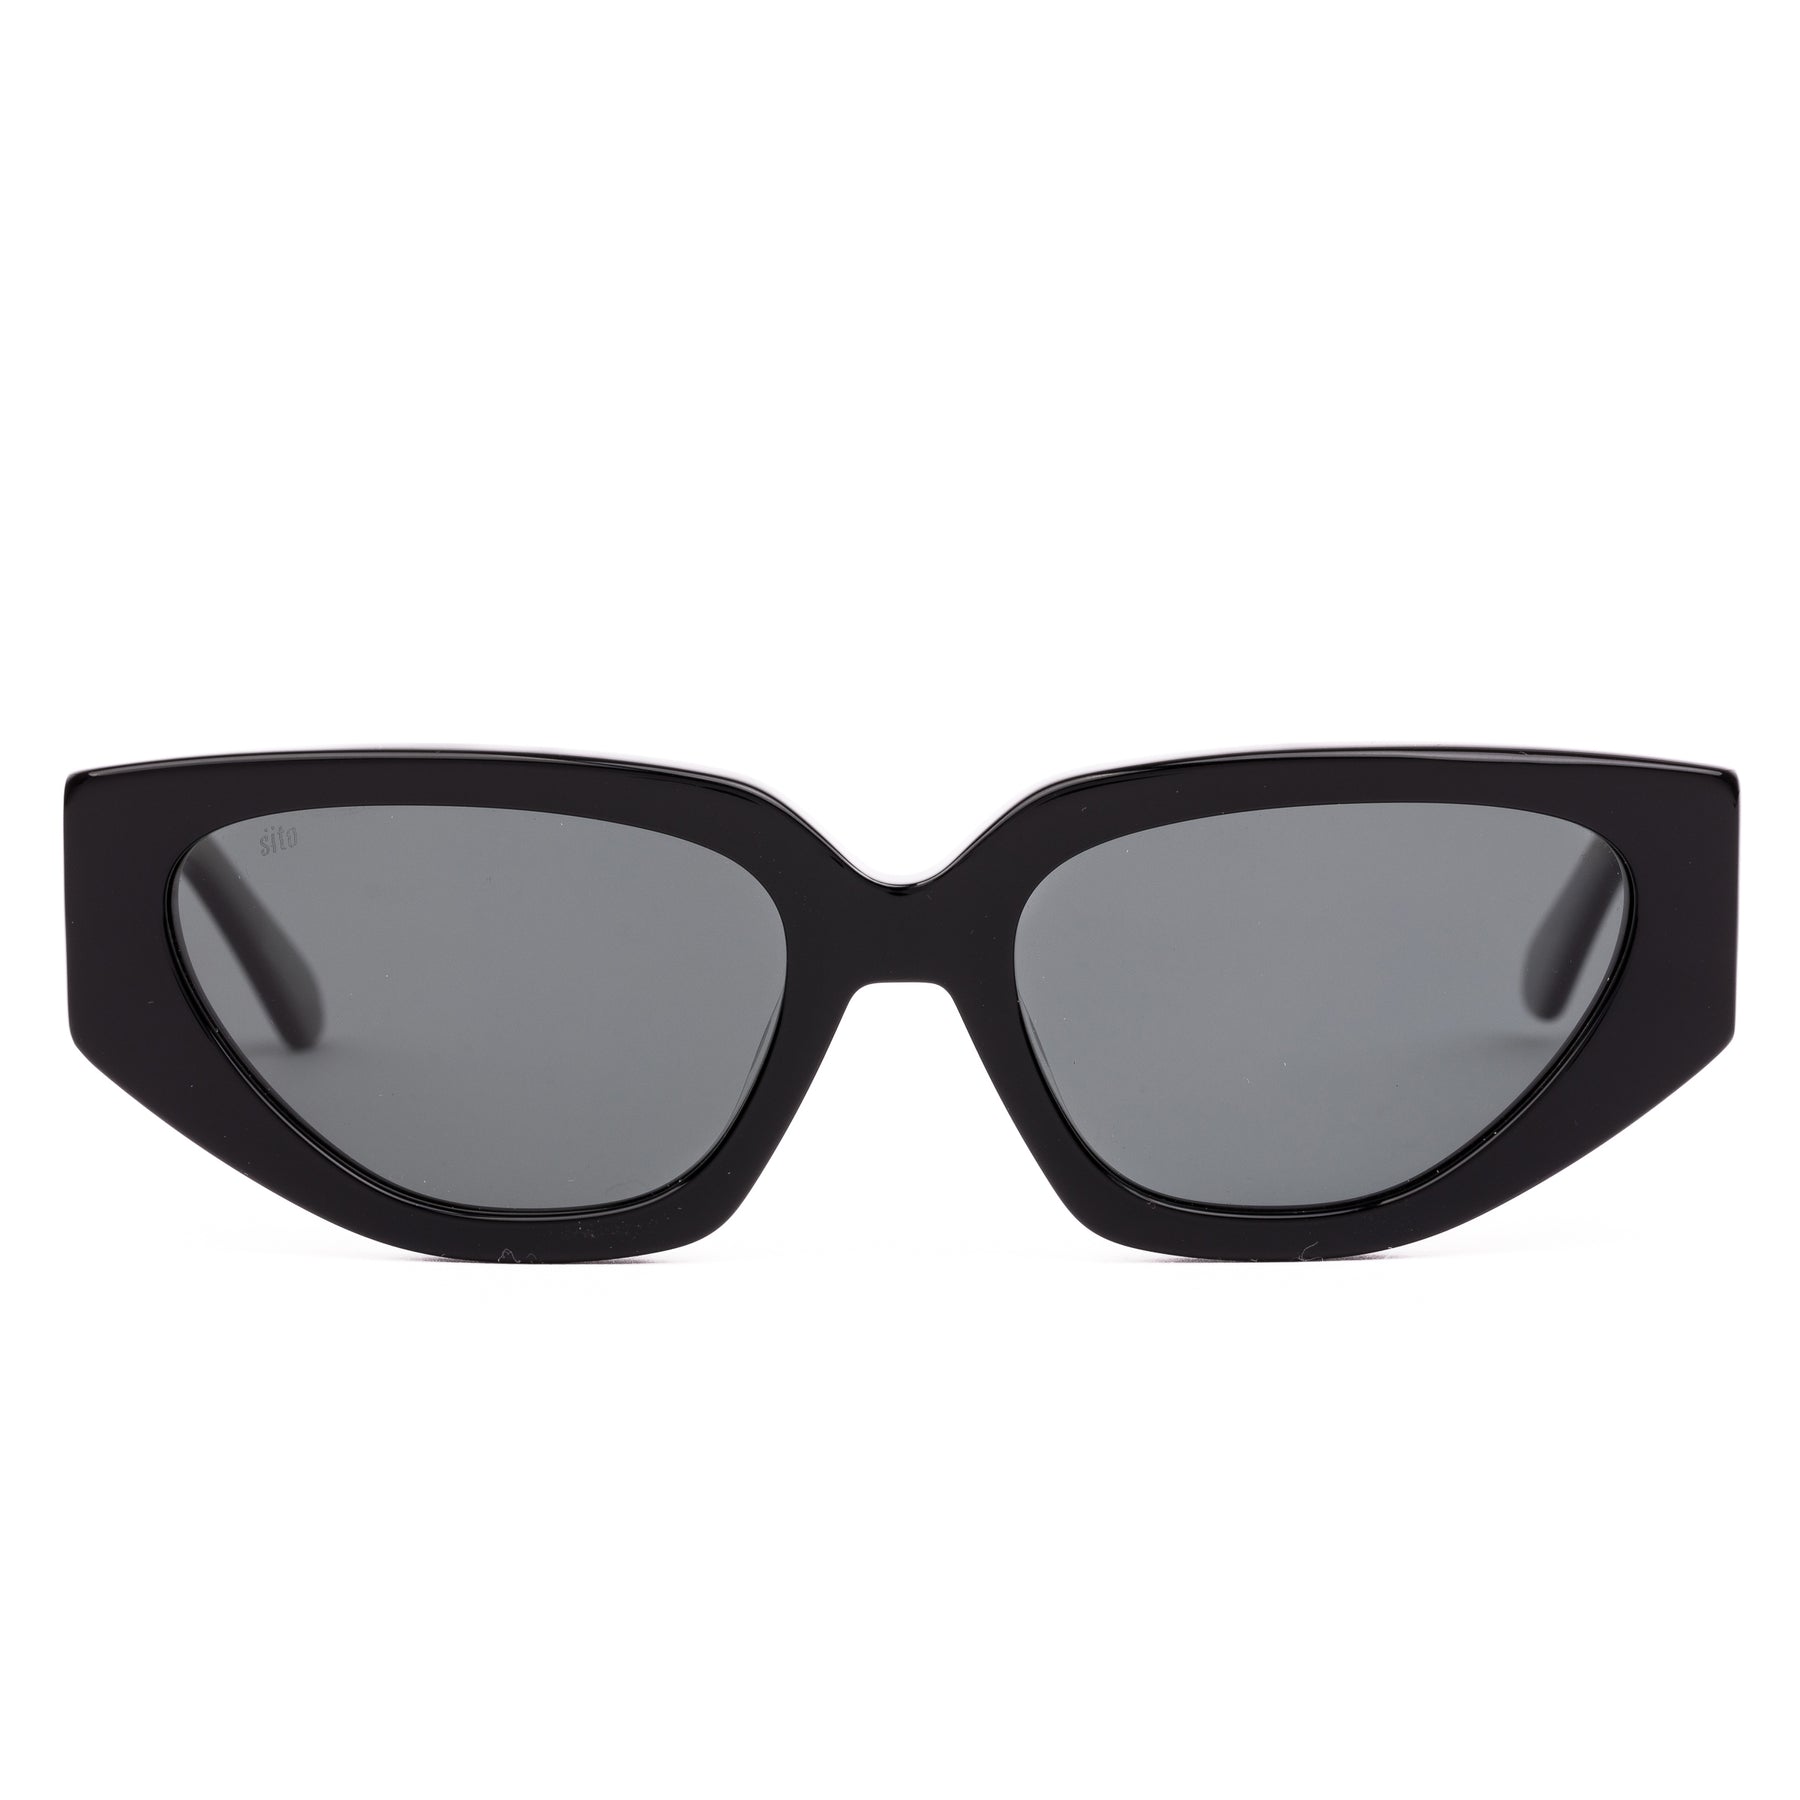 Sito Axis Polarized Sunglasses Black IronGrey